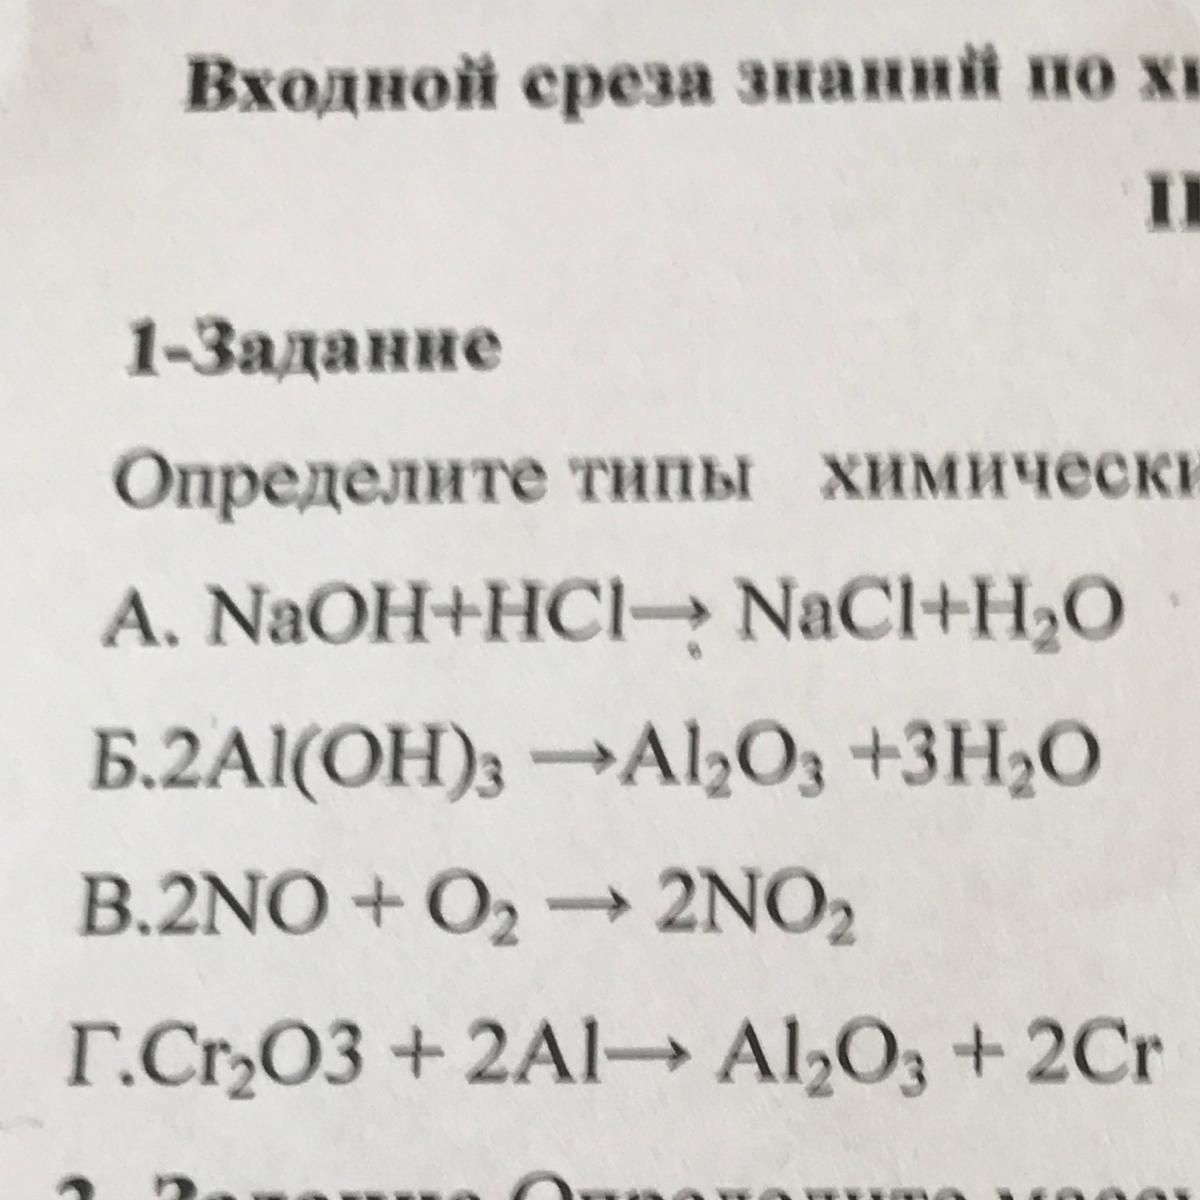 Cr 3 hci. Уравнение хим реакции NAOH+HCI=Naci+h2o. А1(он)3 → а1203 + н20. Раствить коэффициент NAOH + HCI = Naci +h2o. Определите Тип химической реакции , уравнение которой : HCI+NAOH-Naci+h2o.